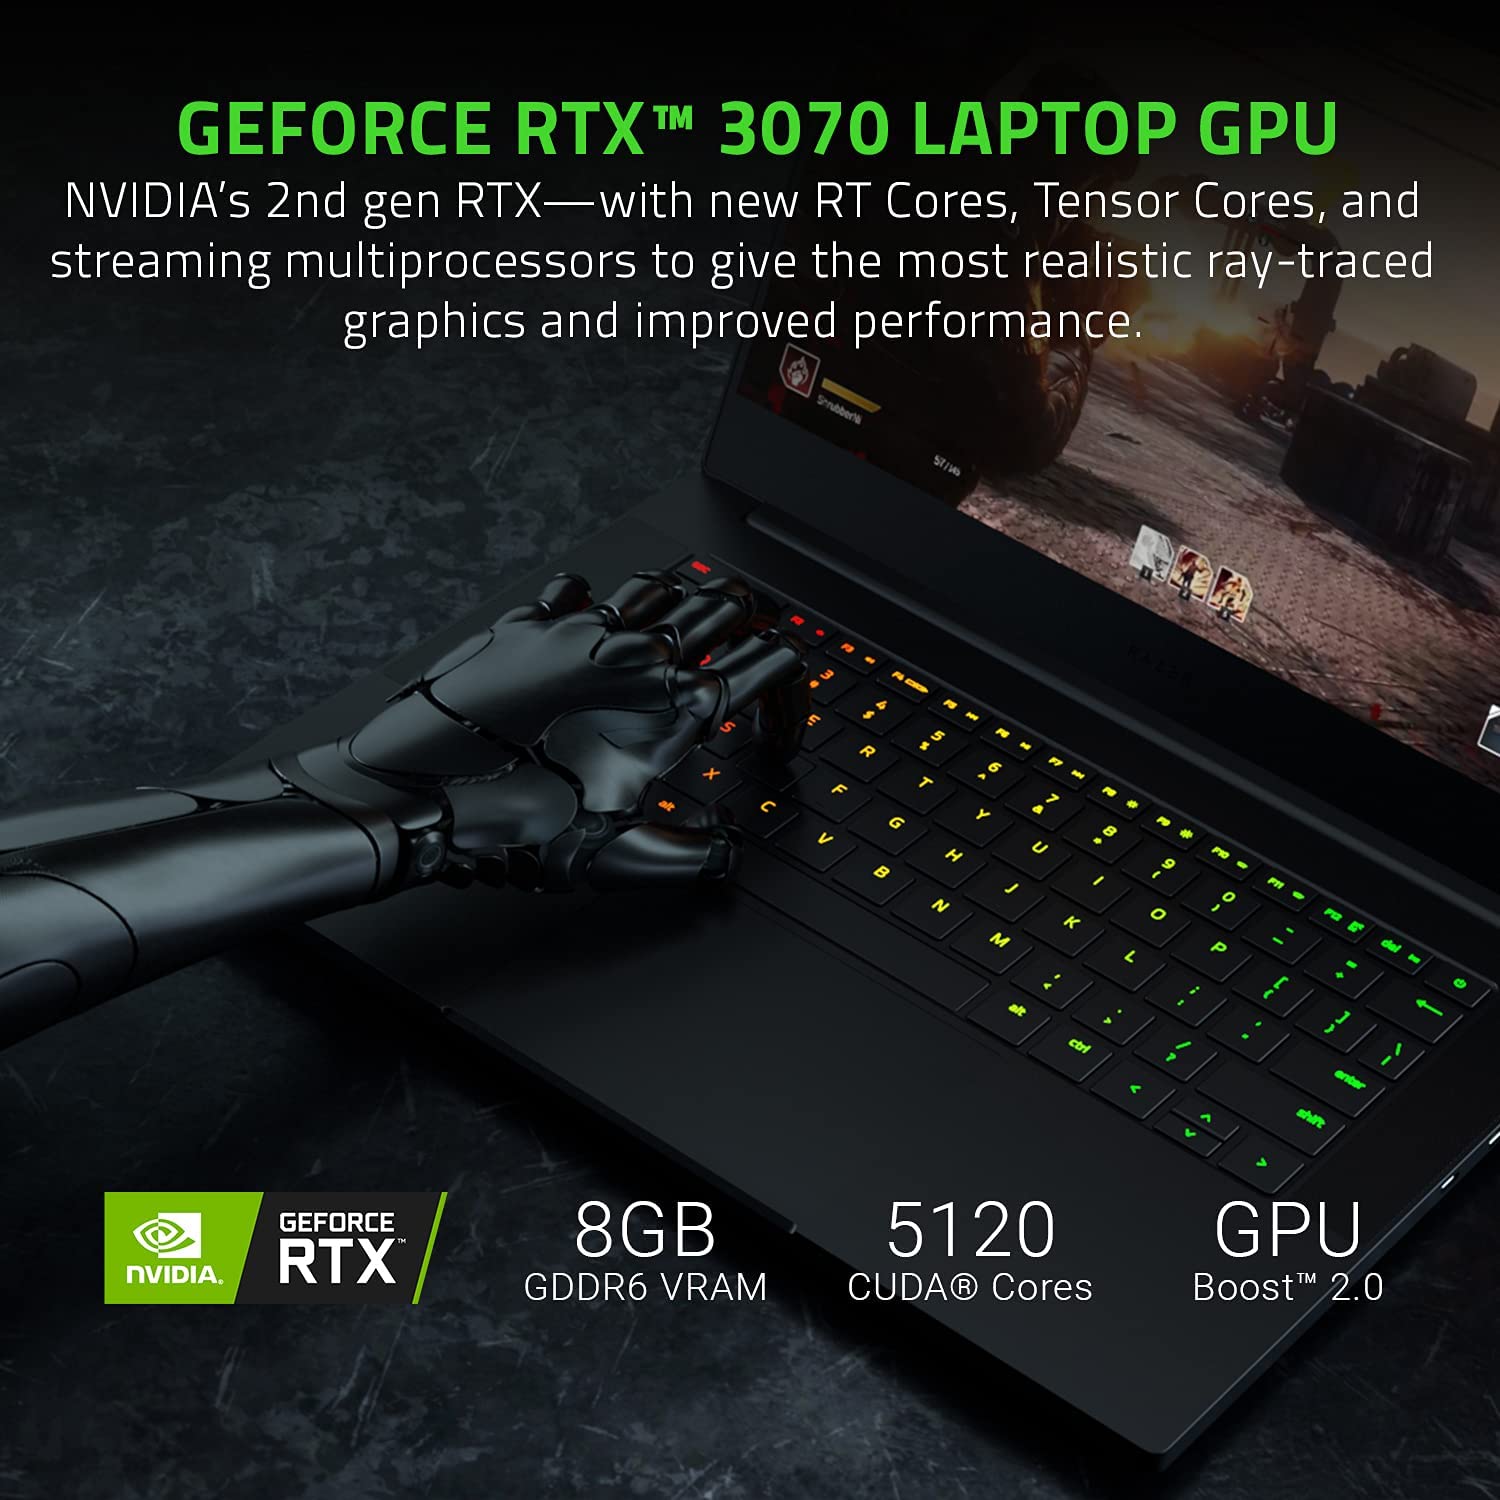 The main GPU feature, Razer Blade 14 gaming laptop